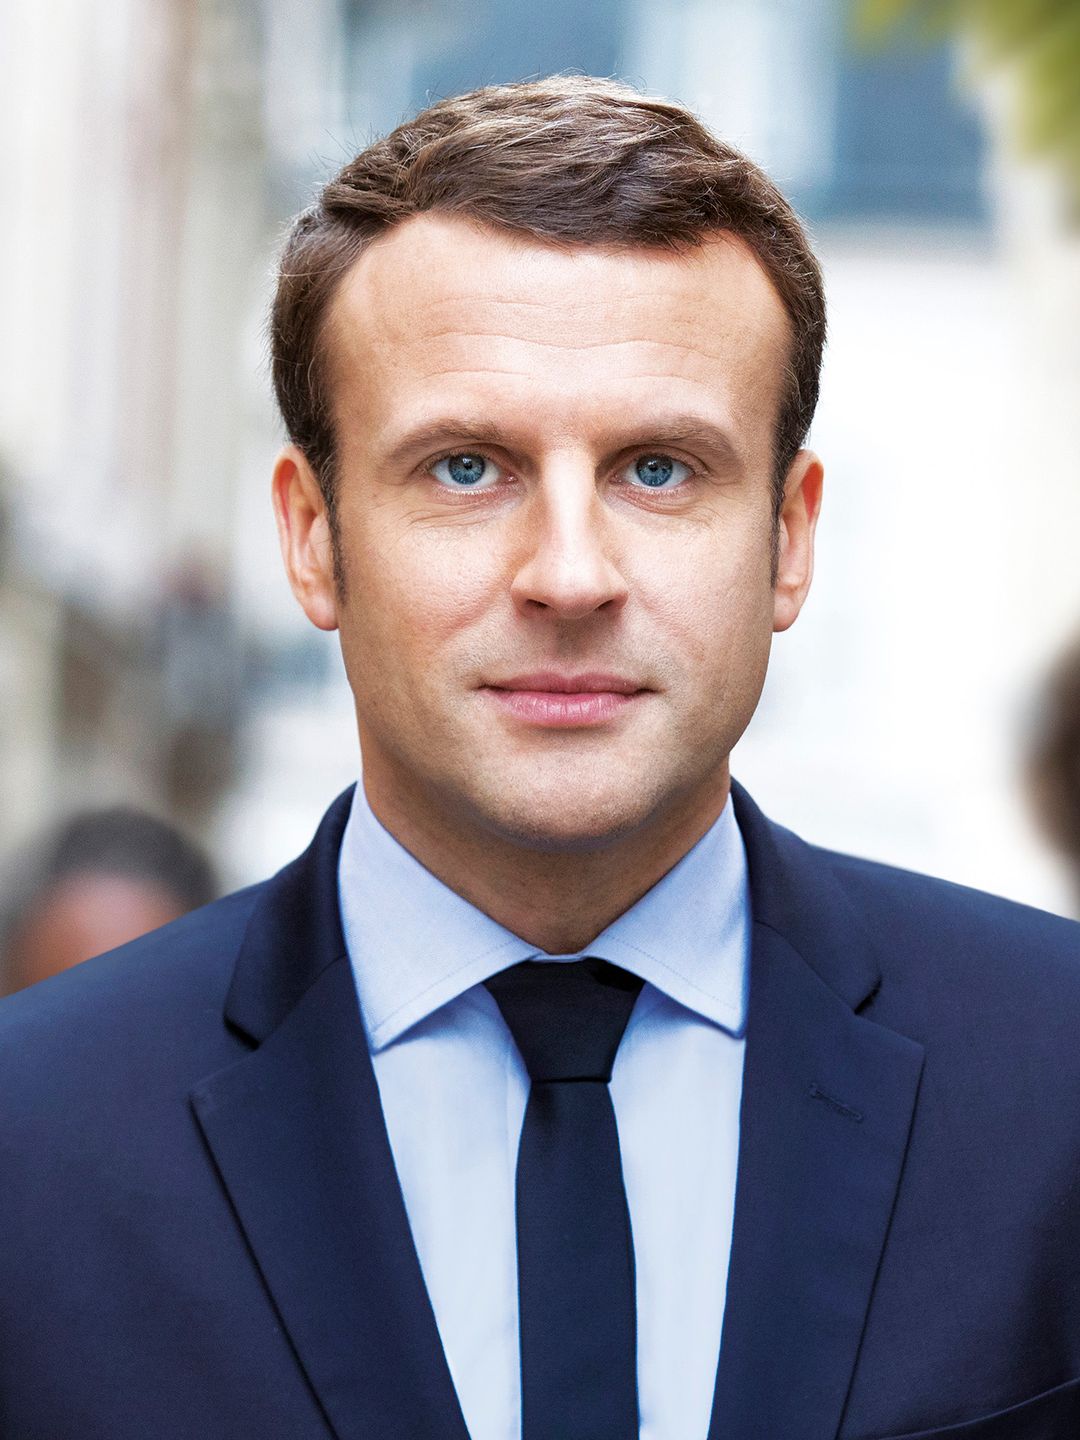 Emmanuel Macron date of birth